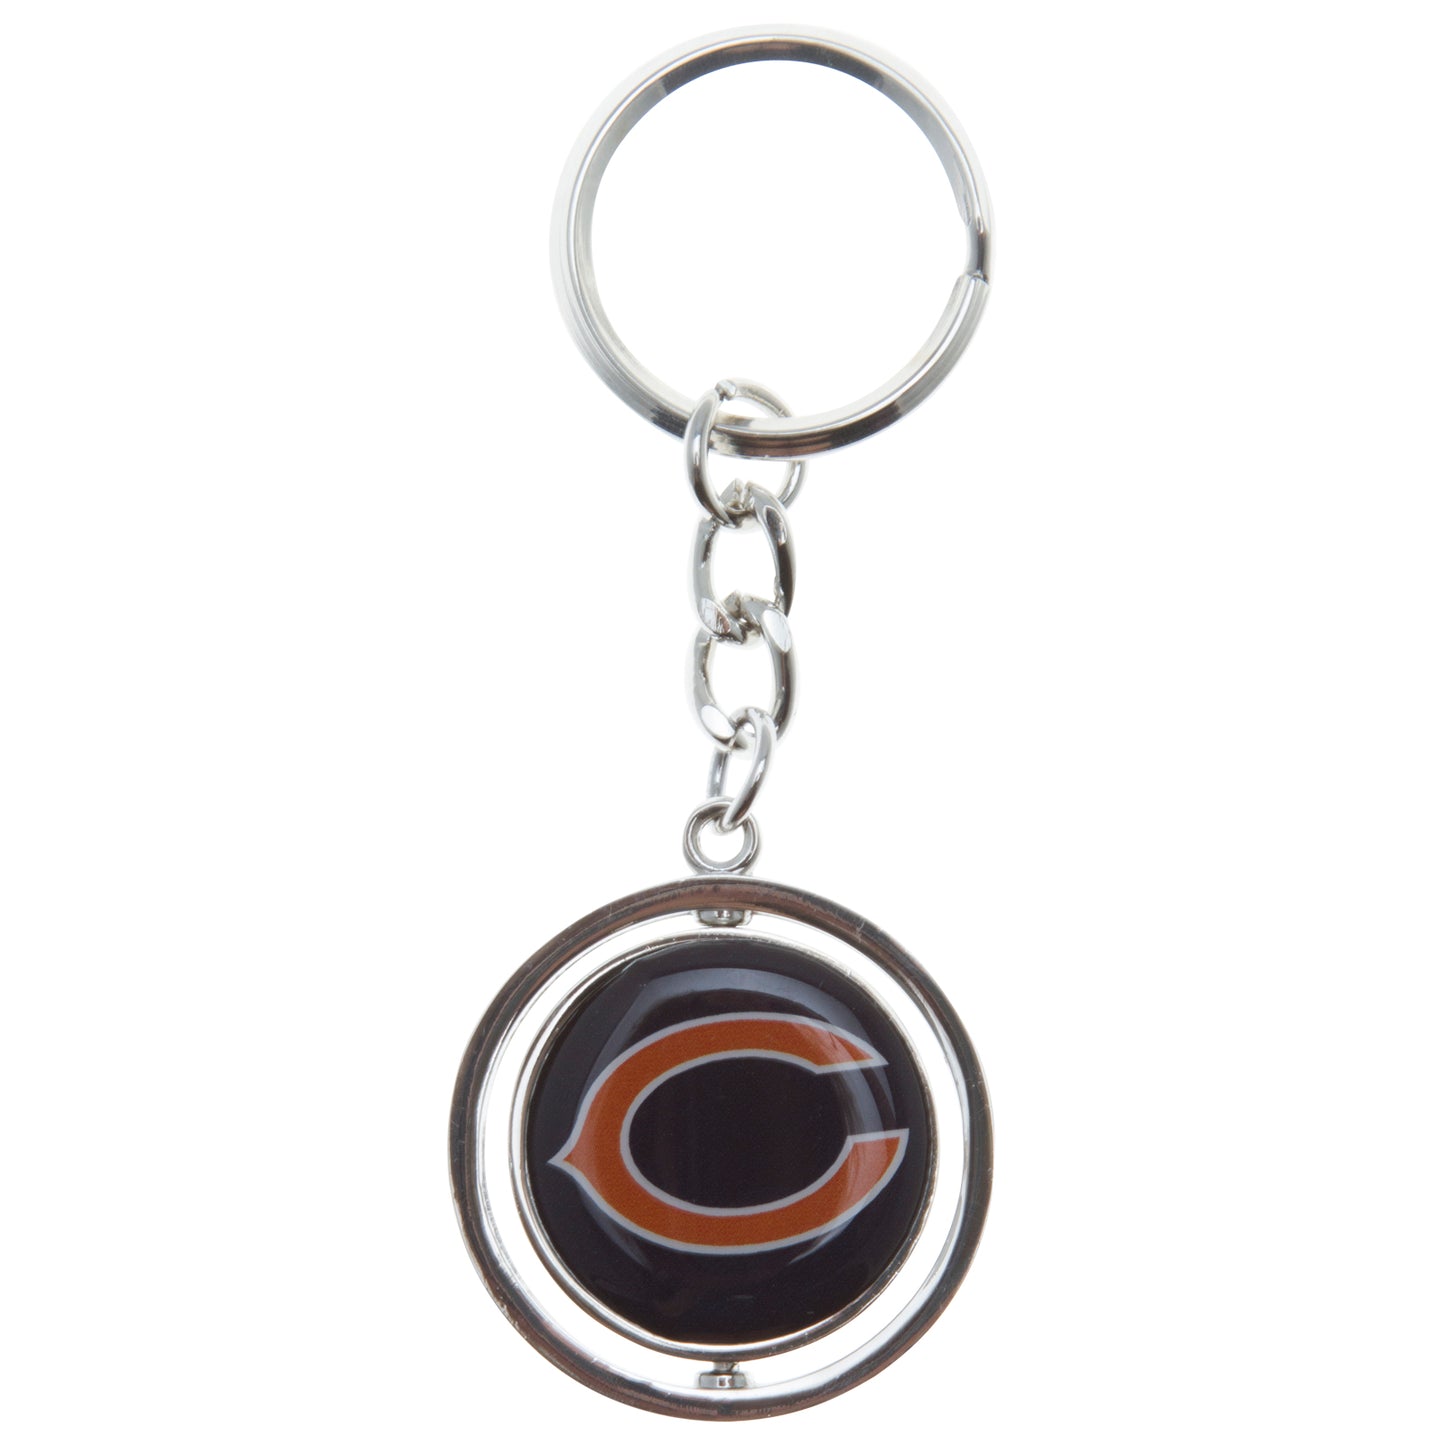 Chicago Bears "C" Logo and Helmet Spinning Pendant Keychain